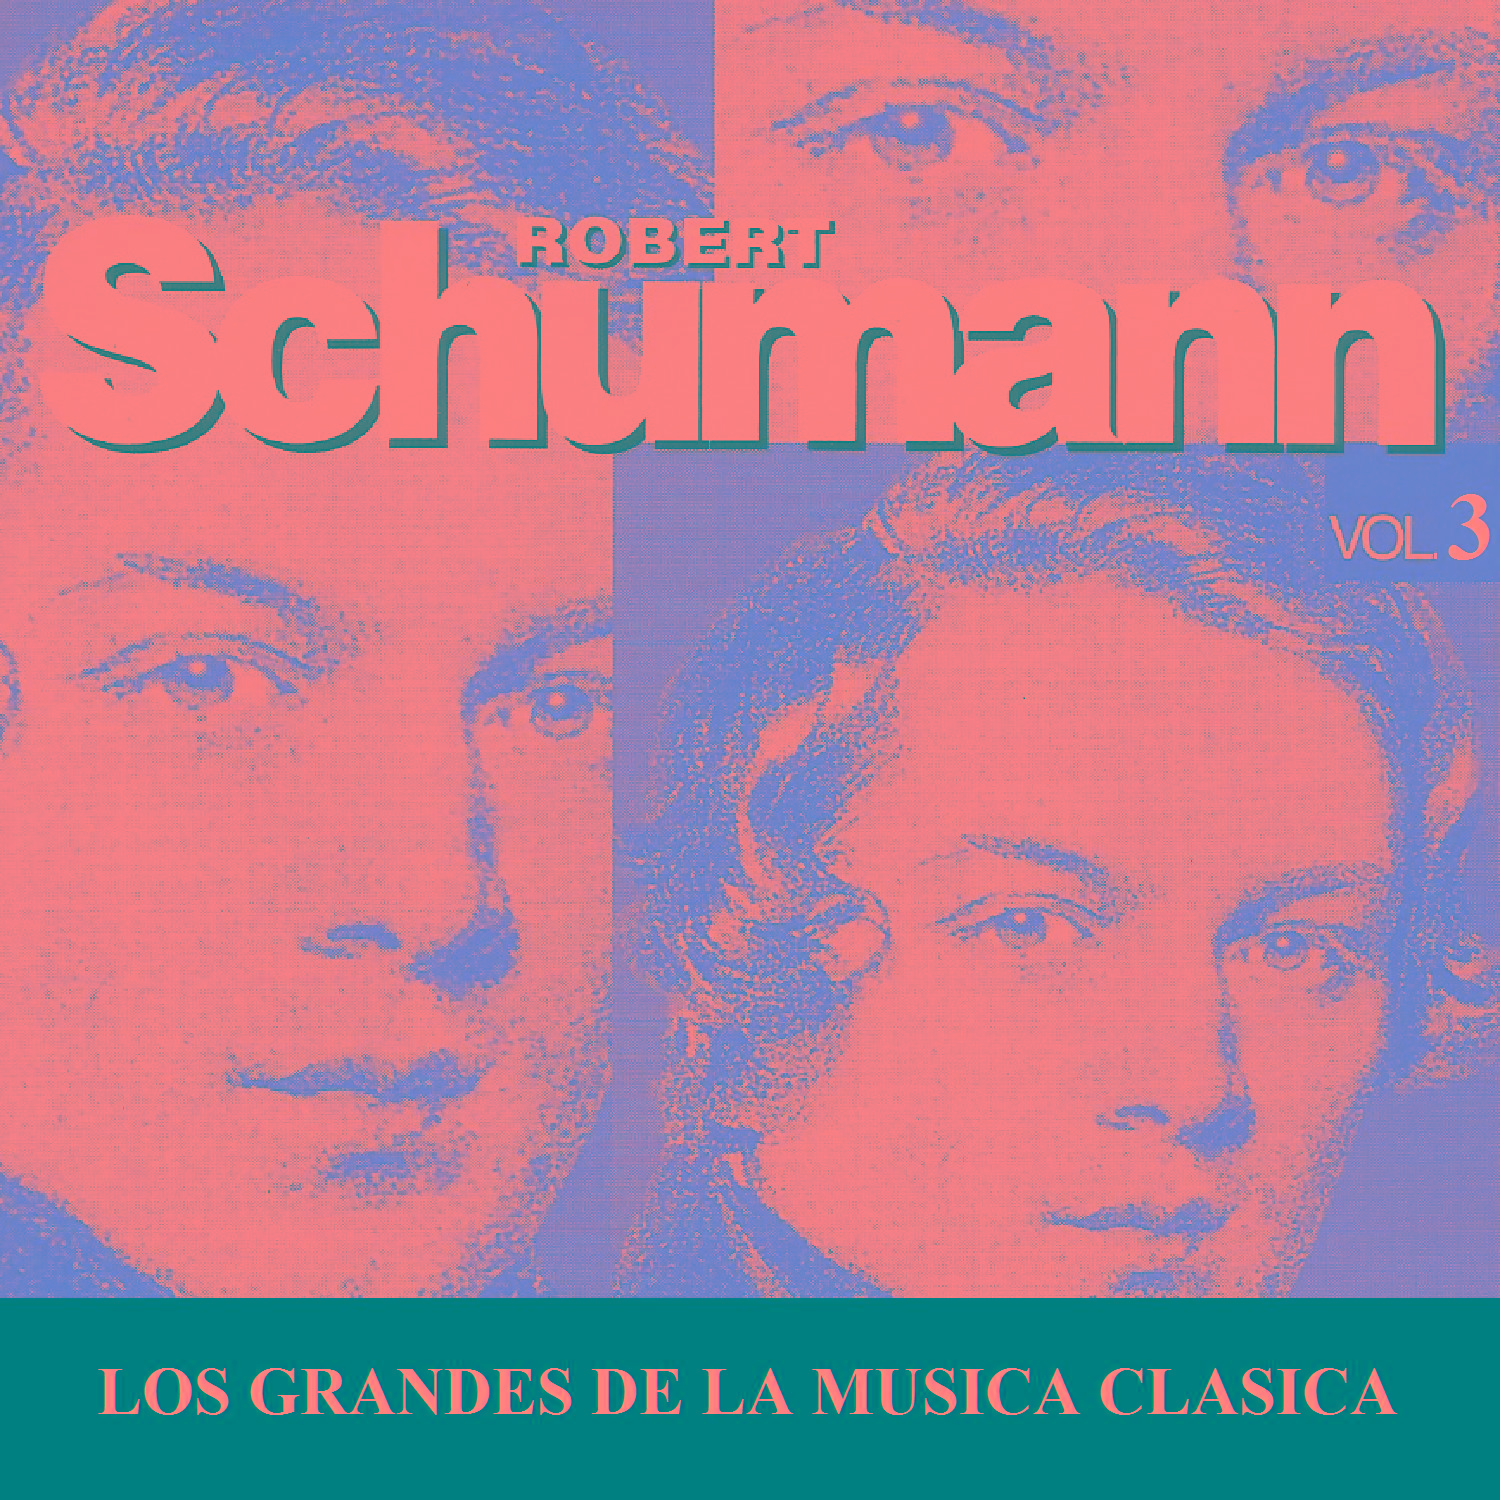 Los Grandes de la Musica Clasica - Robert Schumann Vol. 3